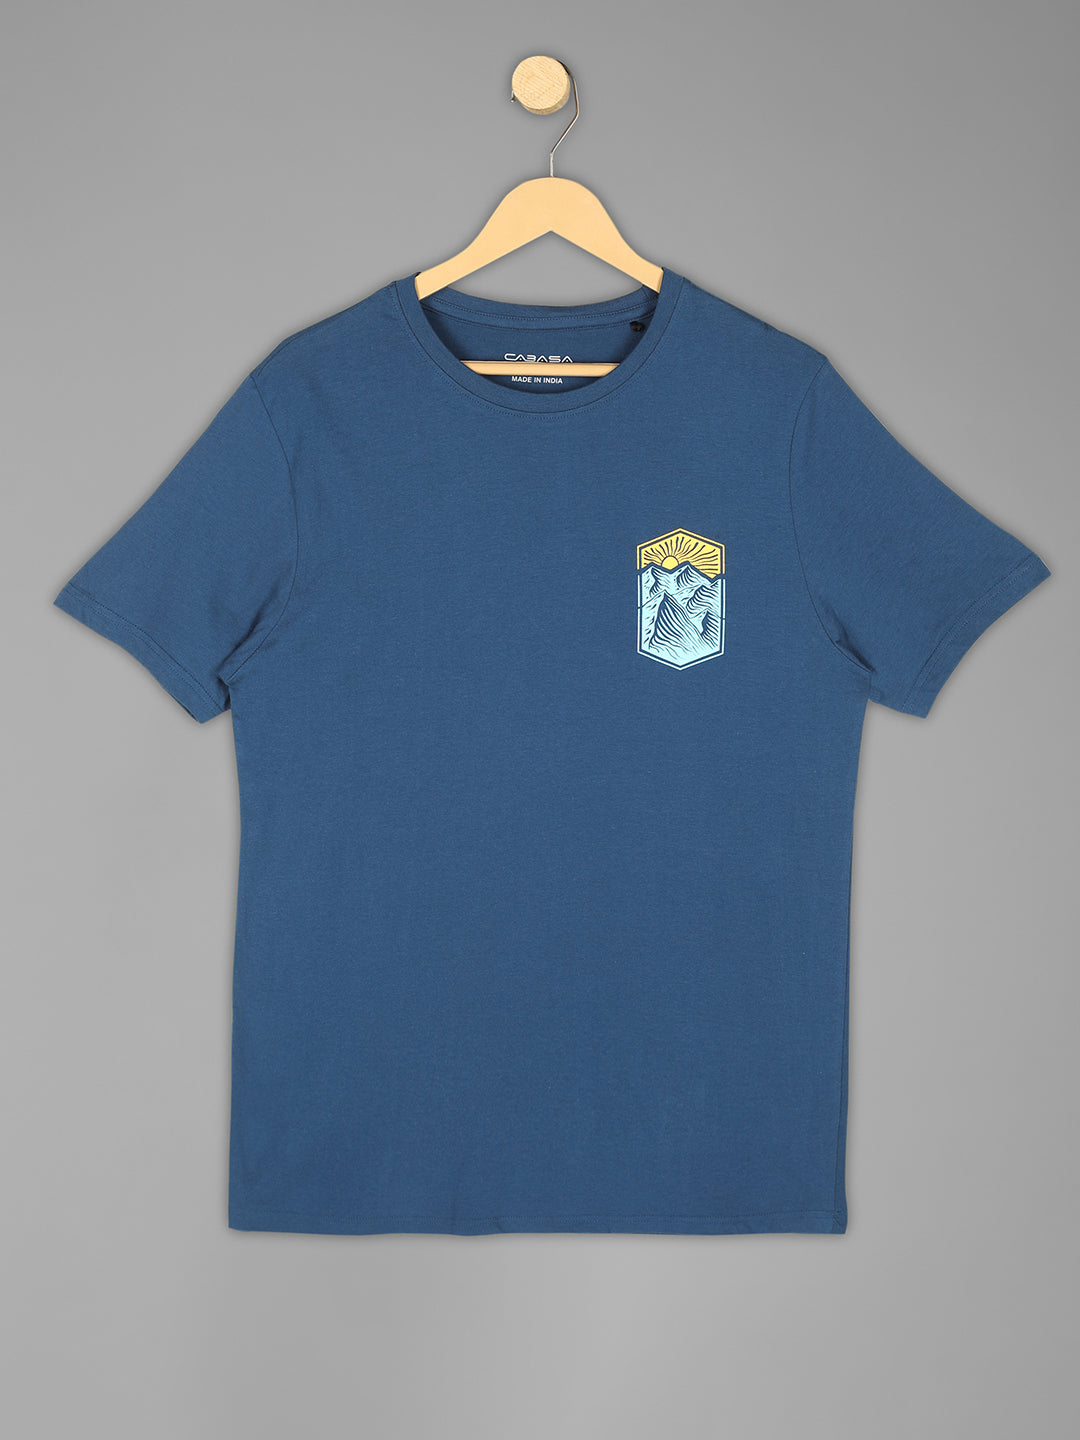 Dan Sunrise - Printed Men's Tshirt - Blue Royale